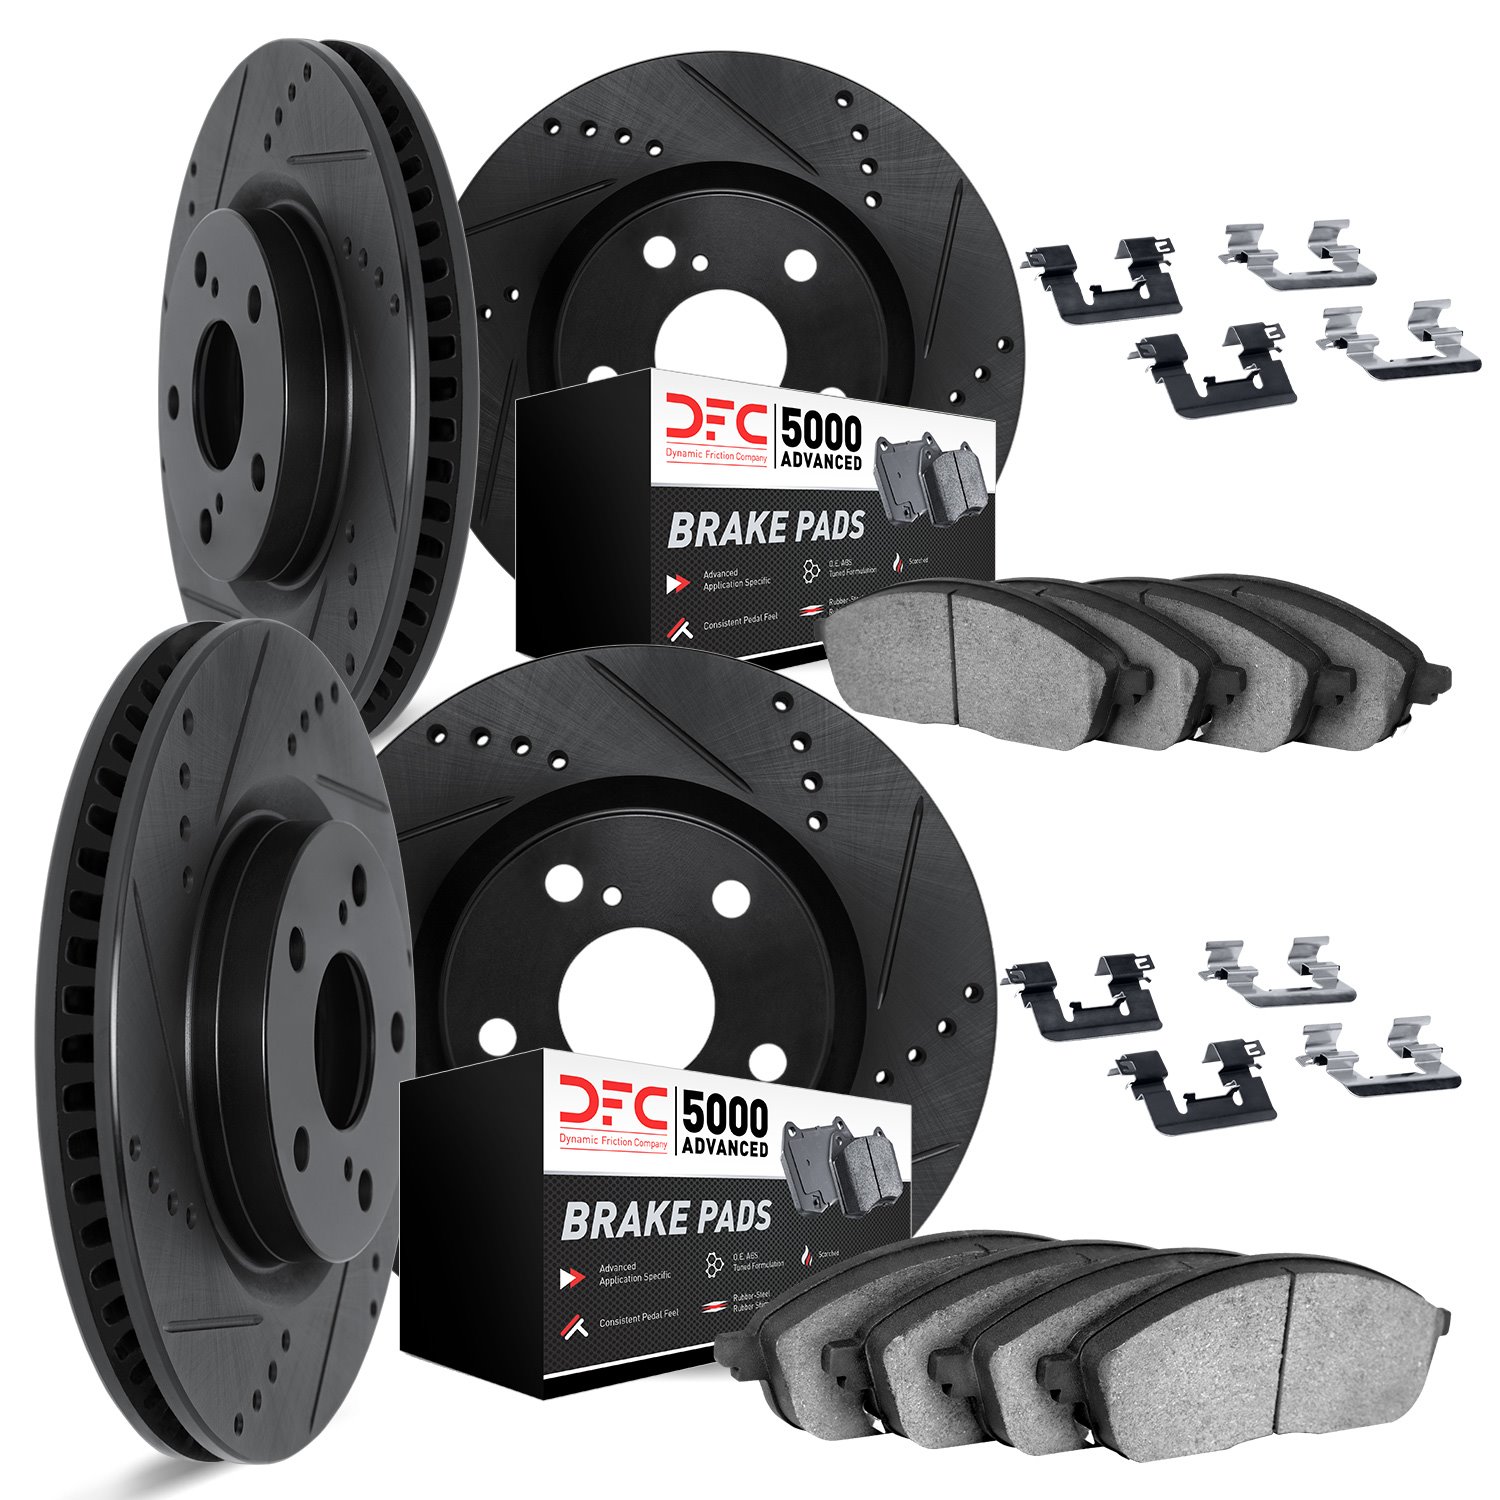 8514-31093 Drilled/Slotted Brake Rotors w/5000 Advanced Brake Pads Kit & Hardware [Black], Fits Select Multiple Makes/Models, Po